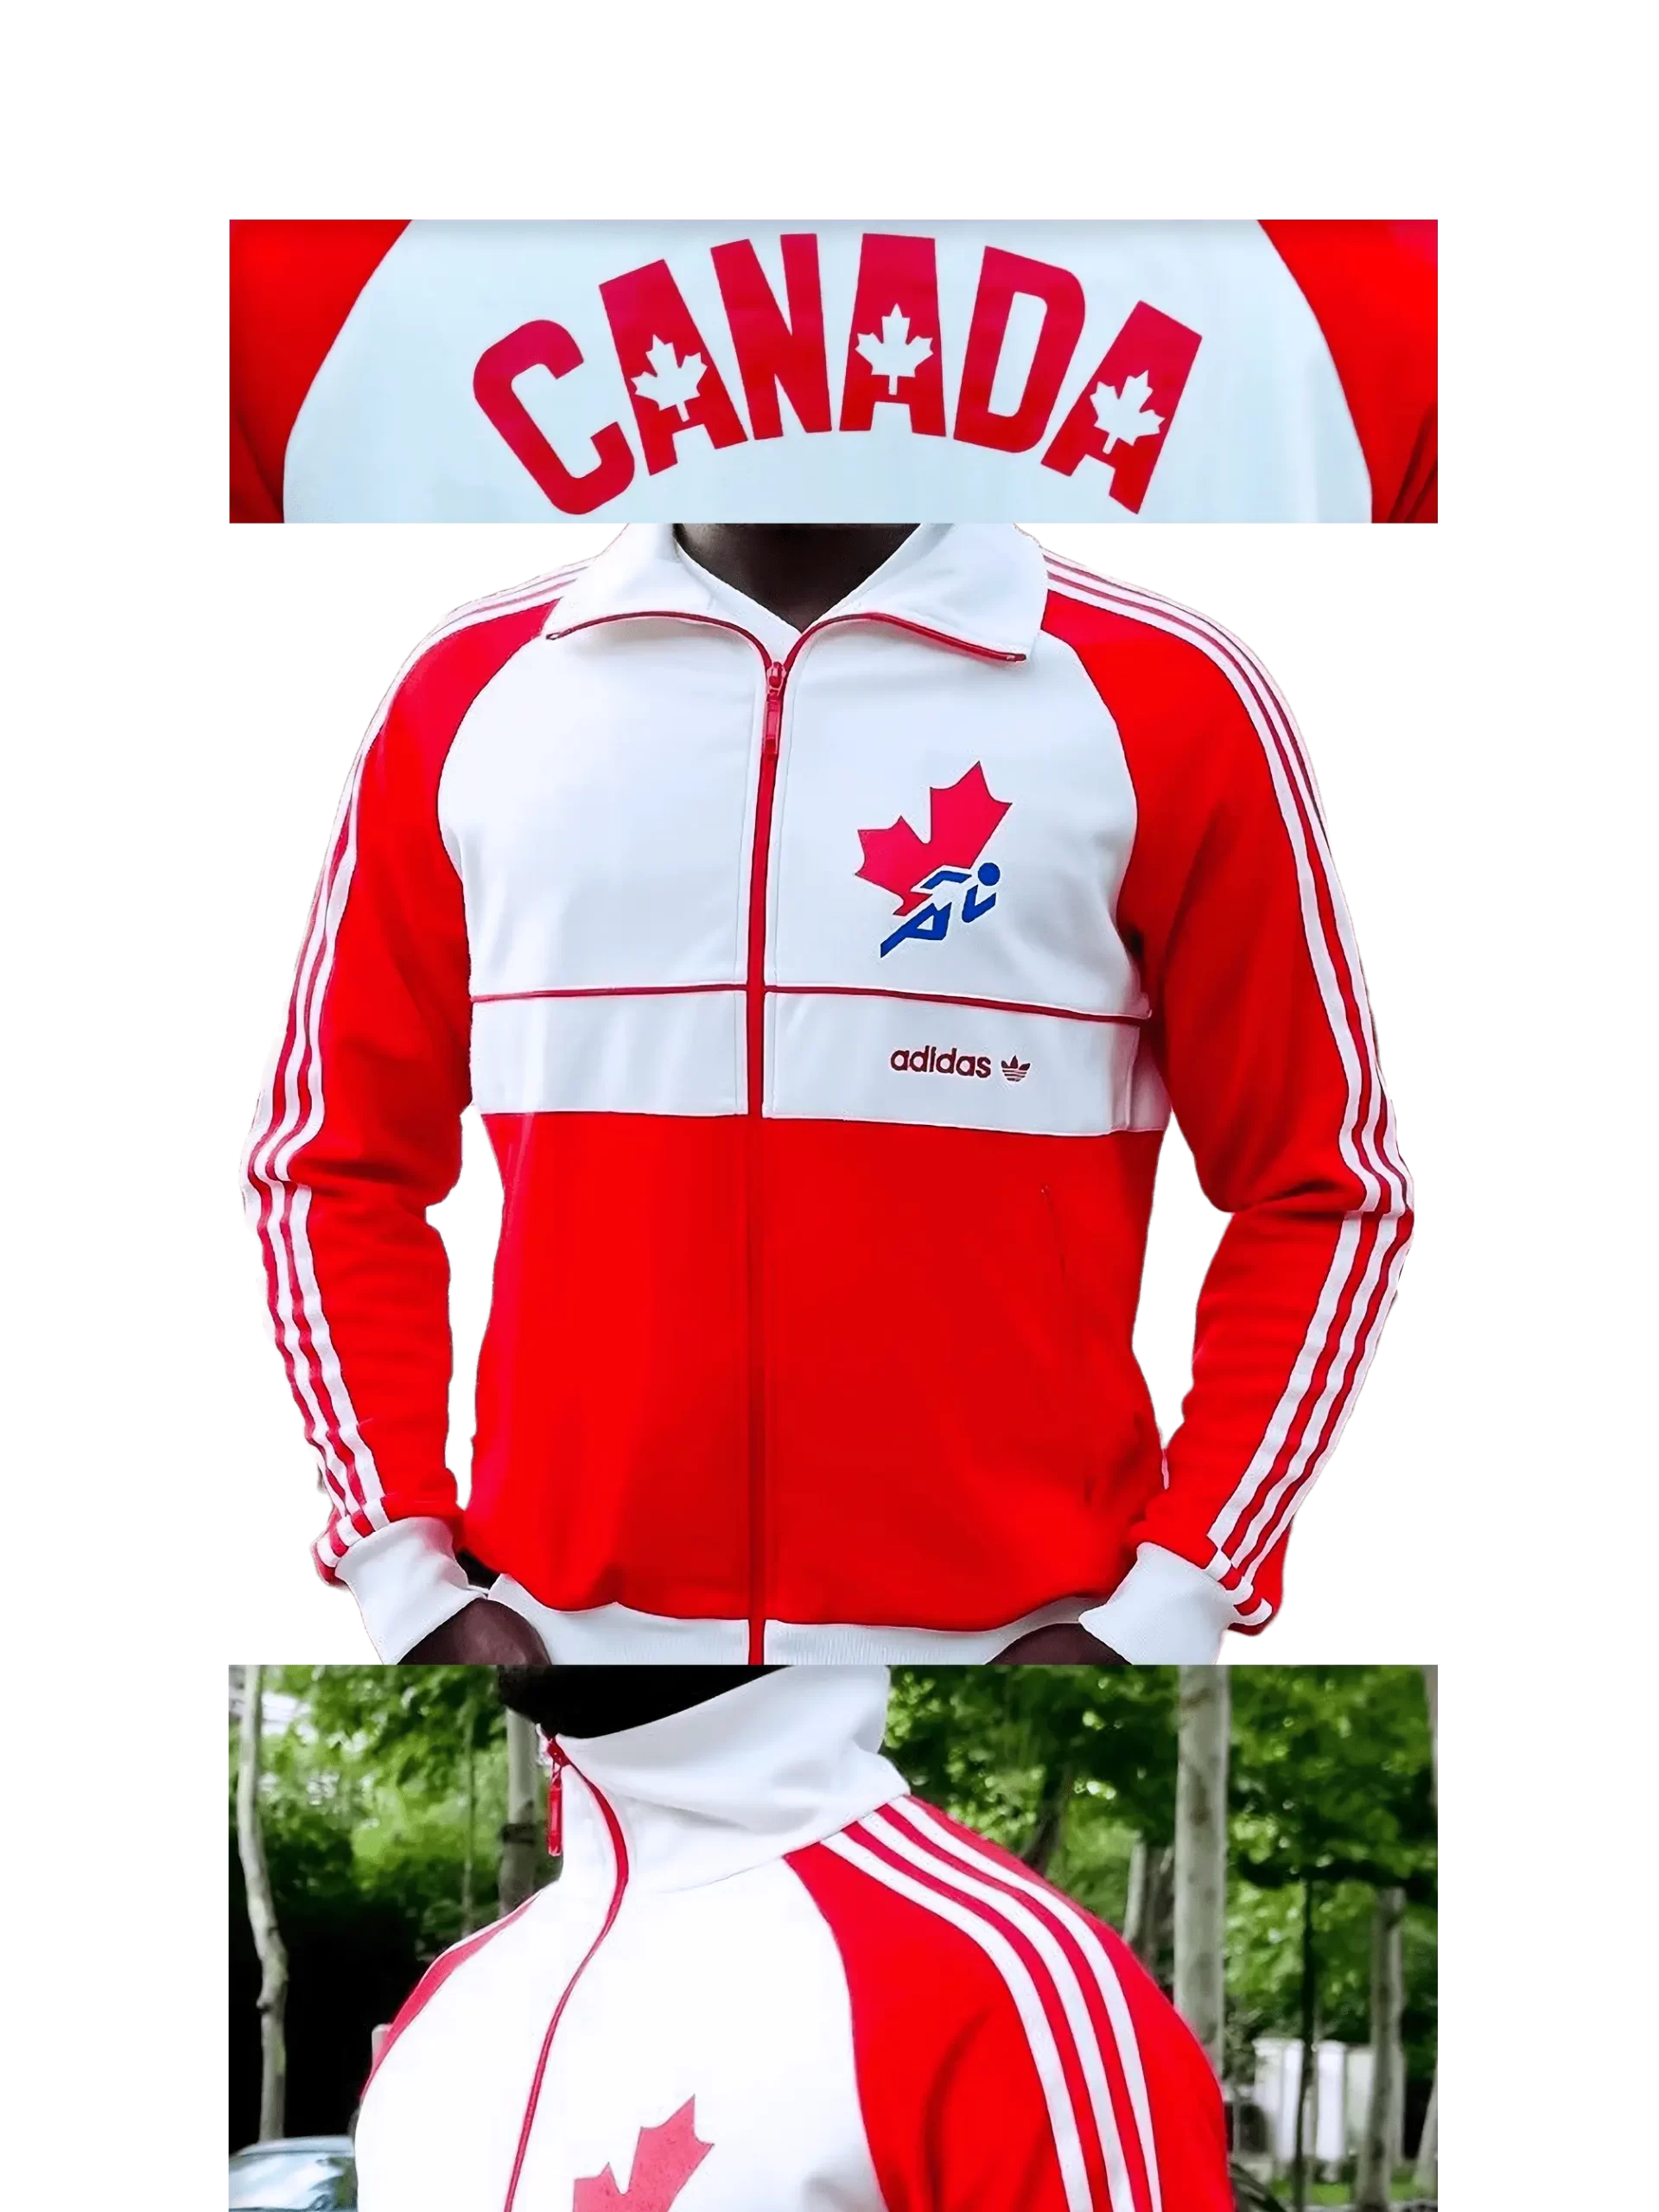 Men's 2002 Canada Olympic Track Top by Adidas: Keen (EnLawded.com file #lmchk60645ip2y123313kg9st)